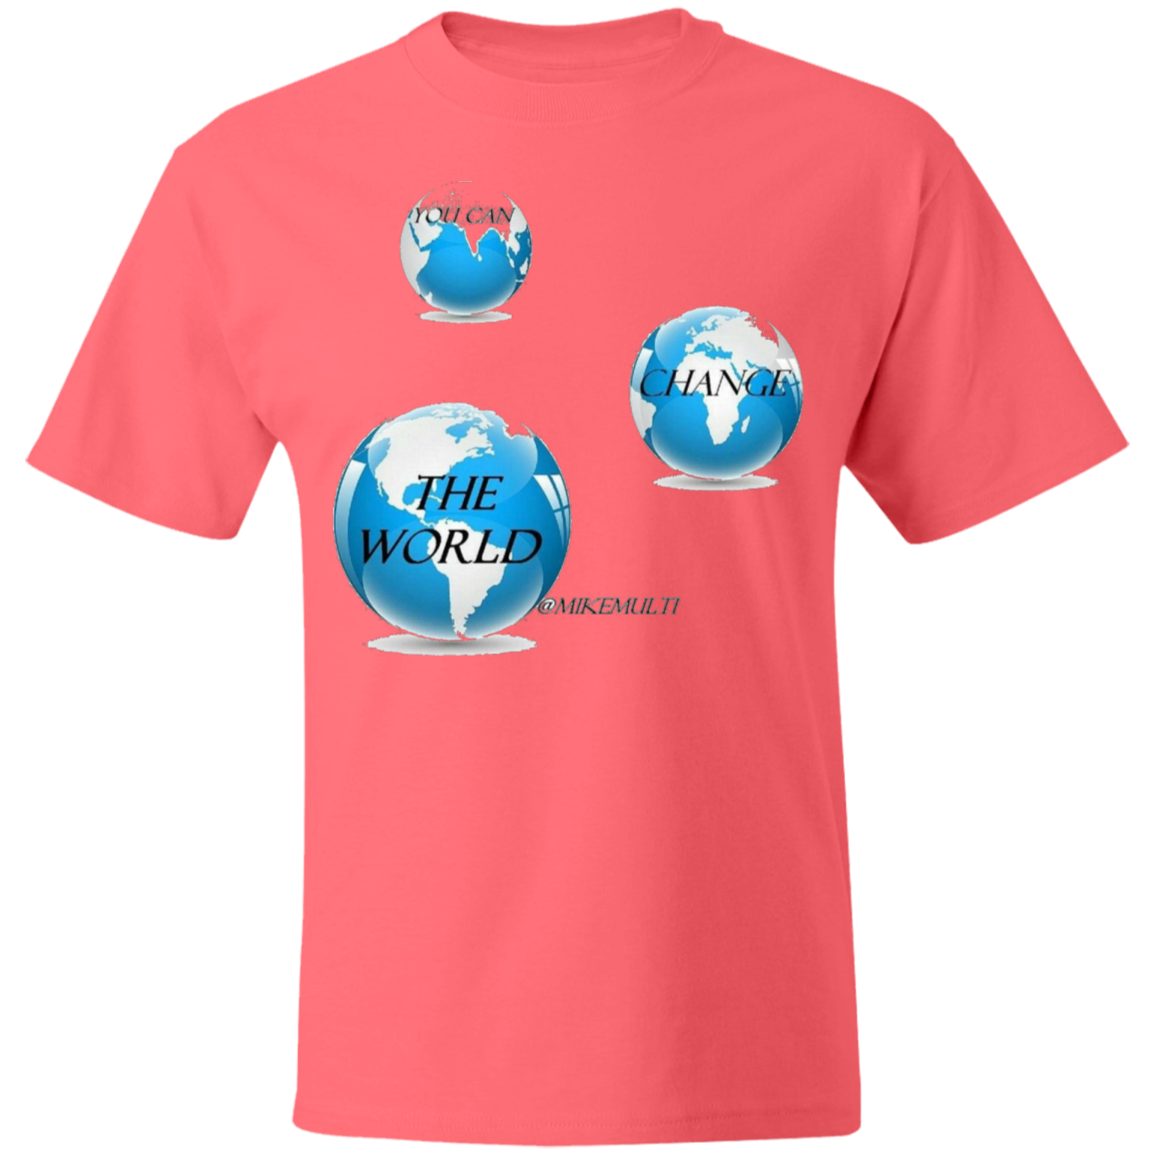 Change The World - Men's T-Shirt